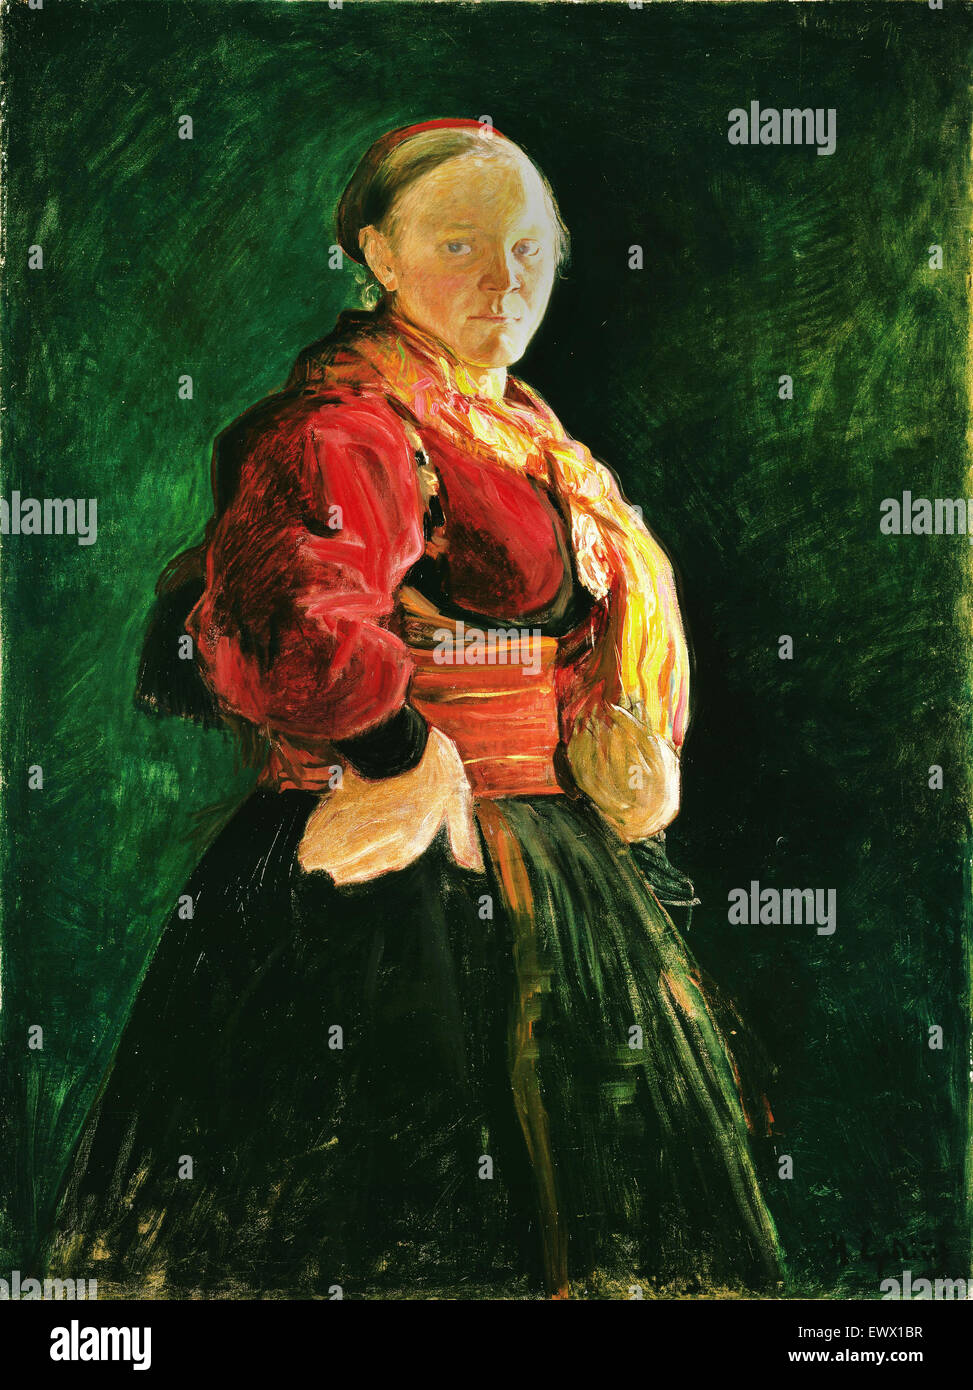 Halfdan Egedius, Portrait of Mari Clasen 1895 Oil on canvas. National Museum of Art, Architecture and Design, Oslo, Norway. Stock Photo